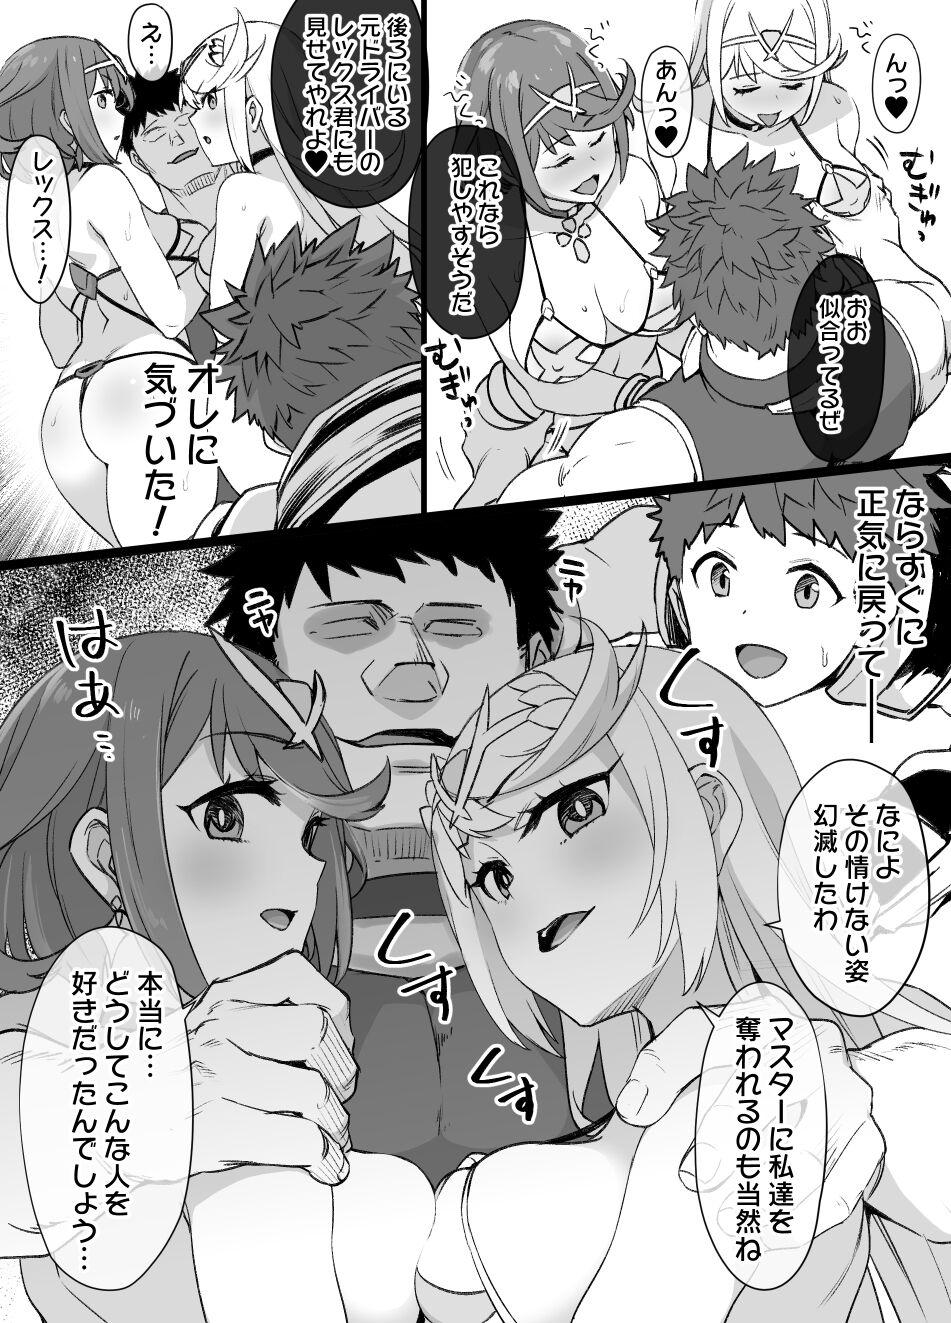 Piercing Homura & Hikari Sennou NTR Manga 14P - Xenoblade chronicles 2 Twinkstudios - Page 5